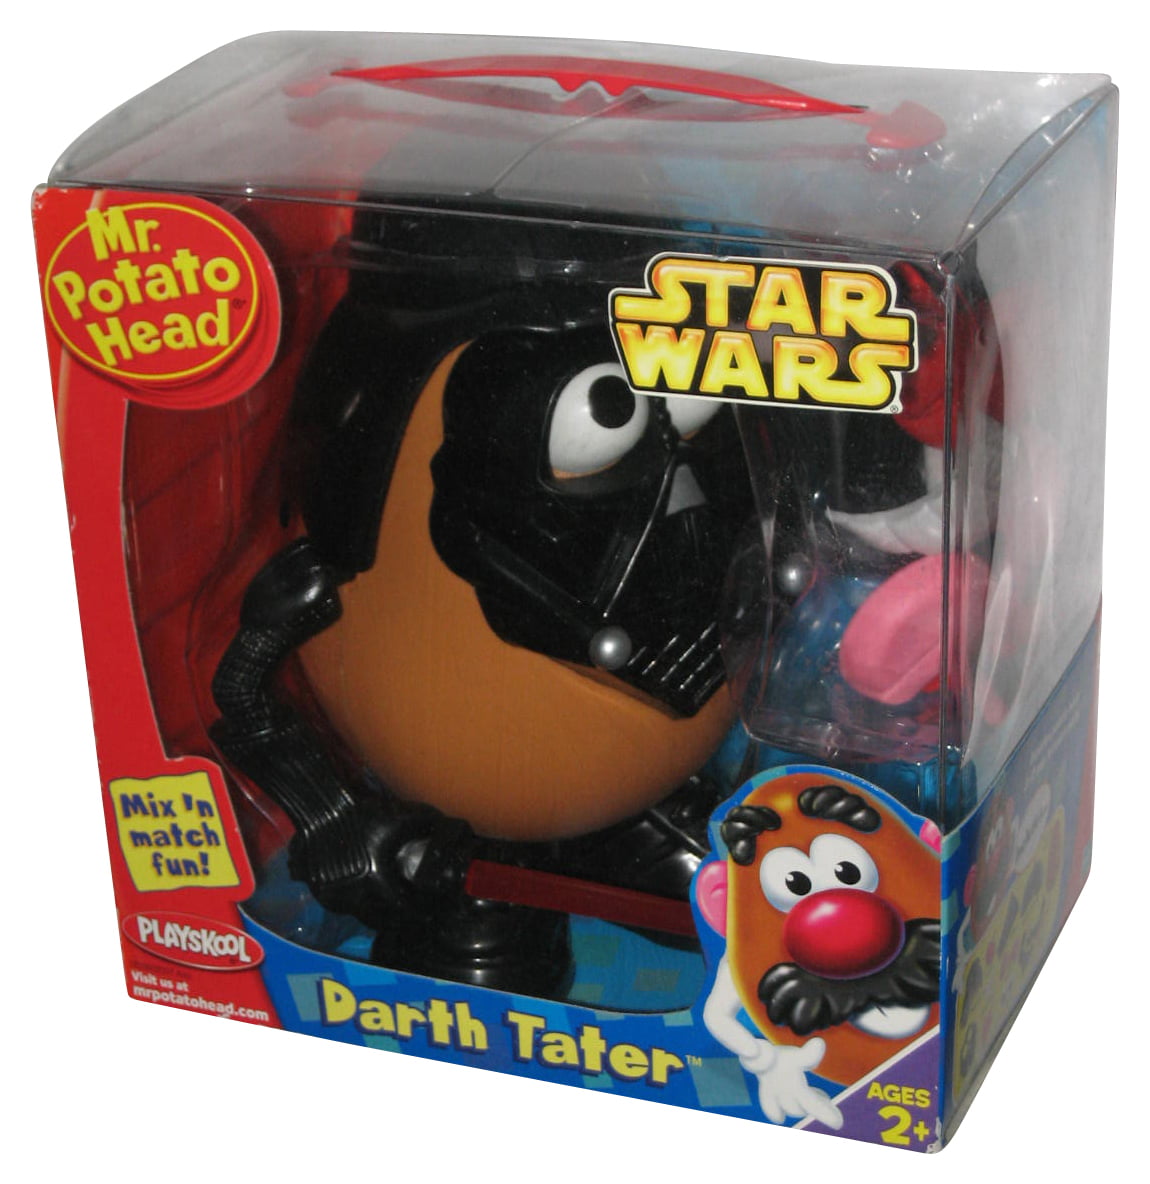 Potato Head Darth Tater New Sealed in Packaging Playskool Hasbro Star Wars Mr 